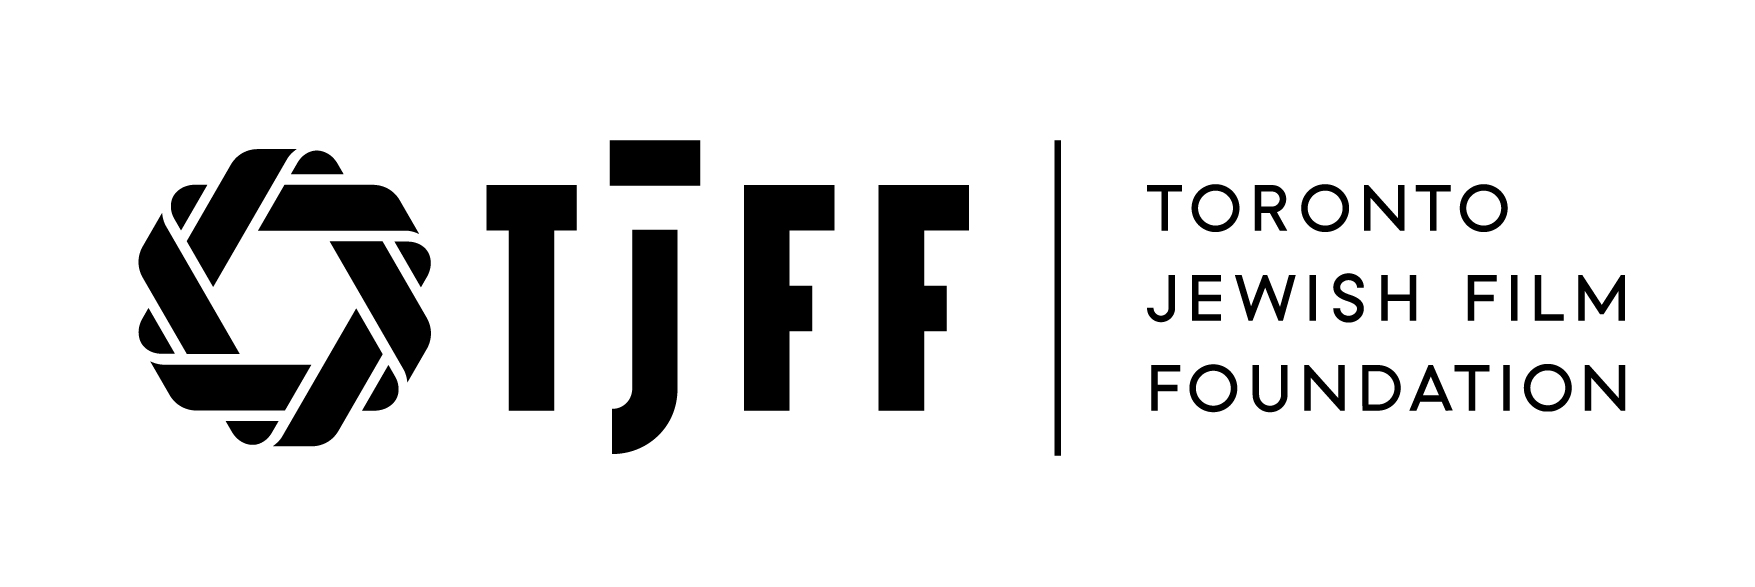 Toronto Jewish Film Foundation logo